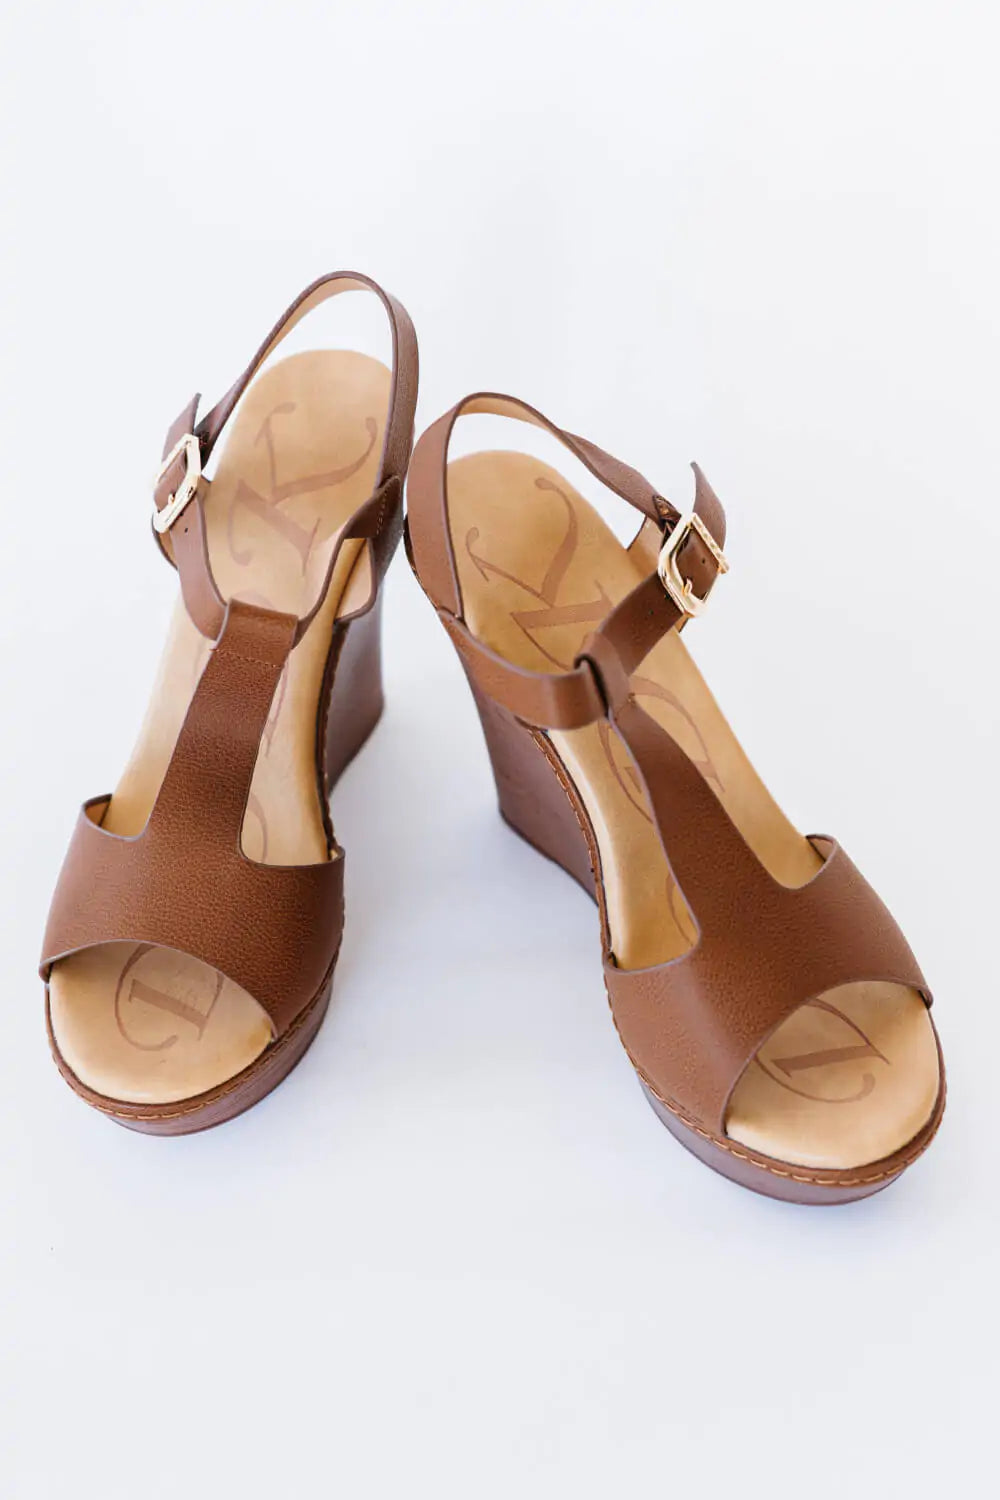 Tan Wedge Platform Sandals 6.5